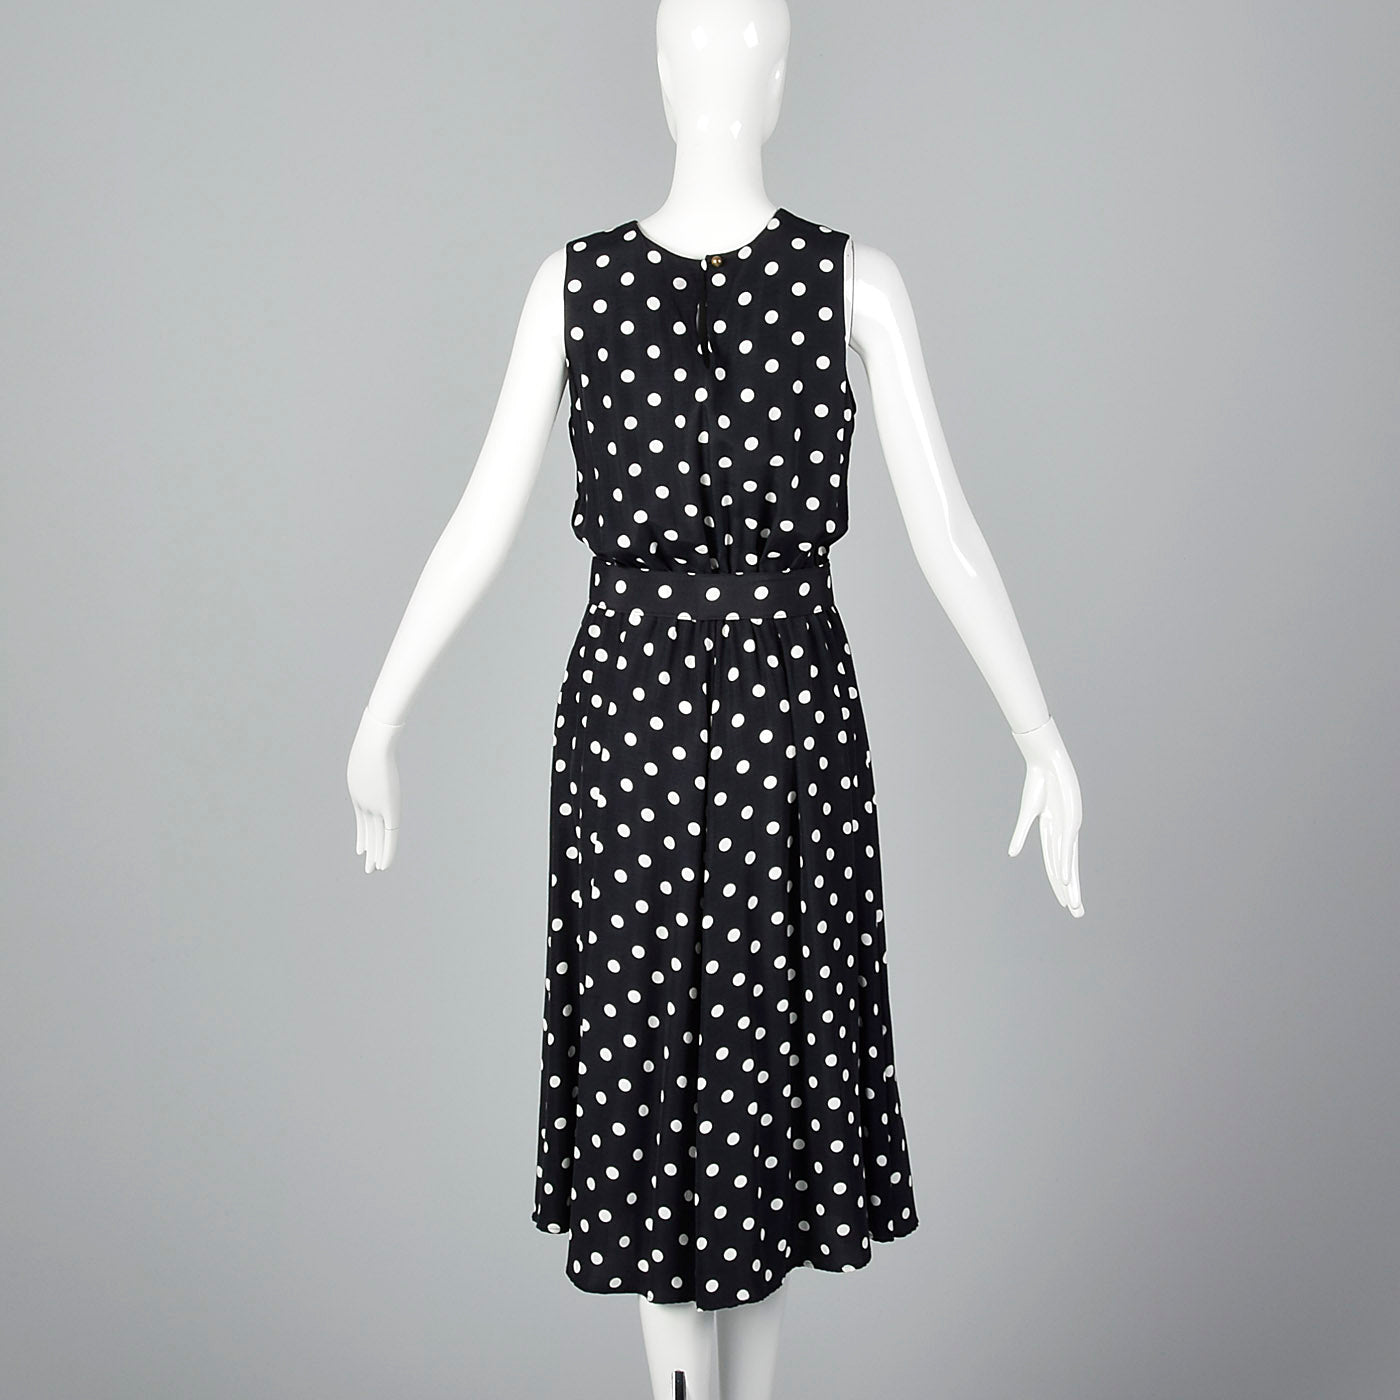 1980s Black and White Polka Dot Dress